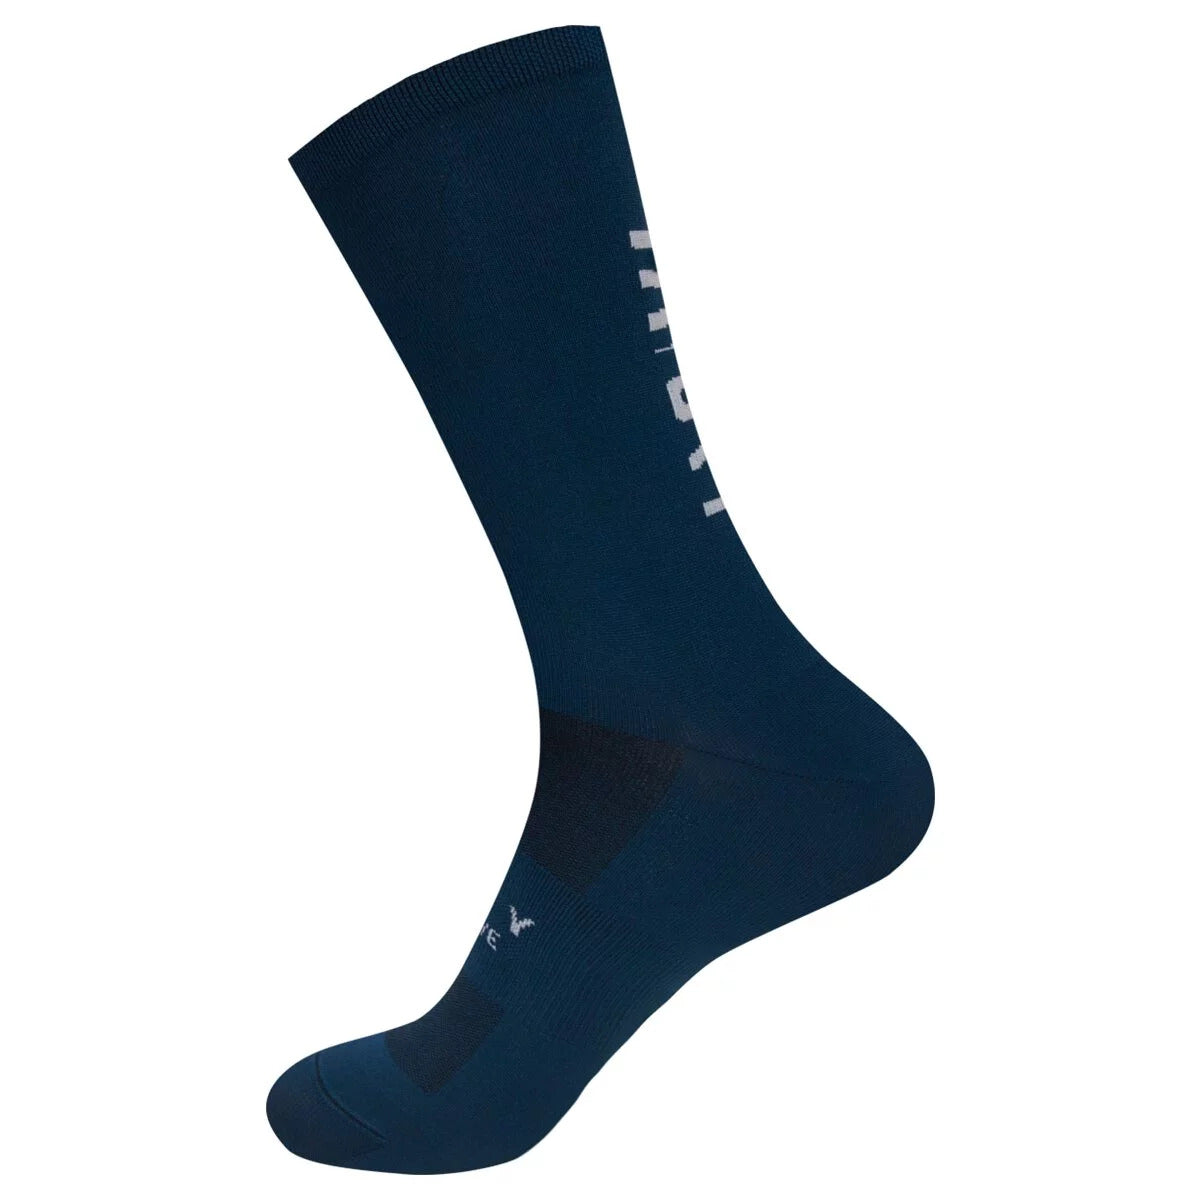 Baisky Premium Cycling Socks - TRSS129 Purity Dark Blue